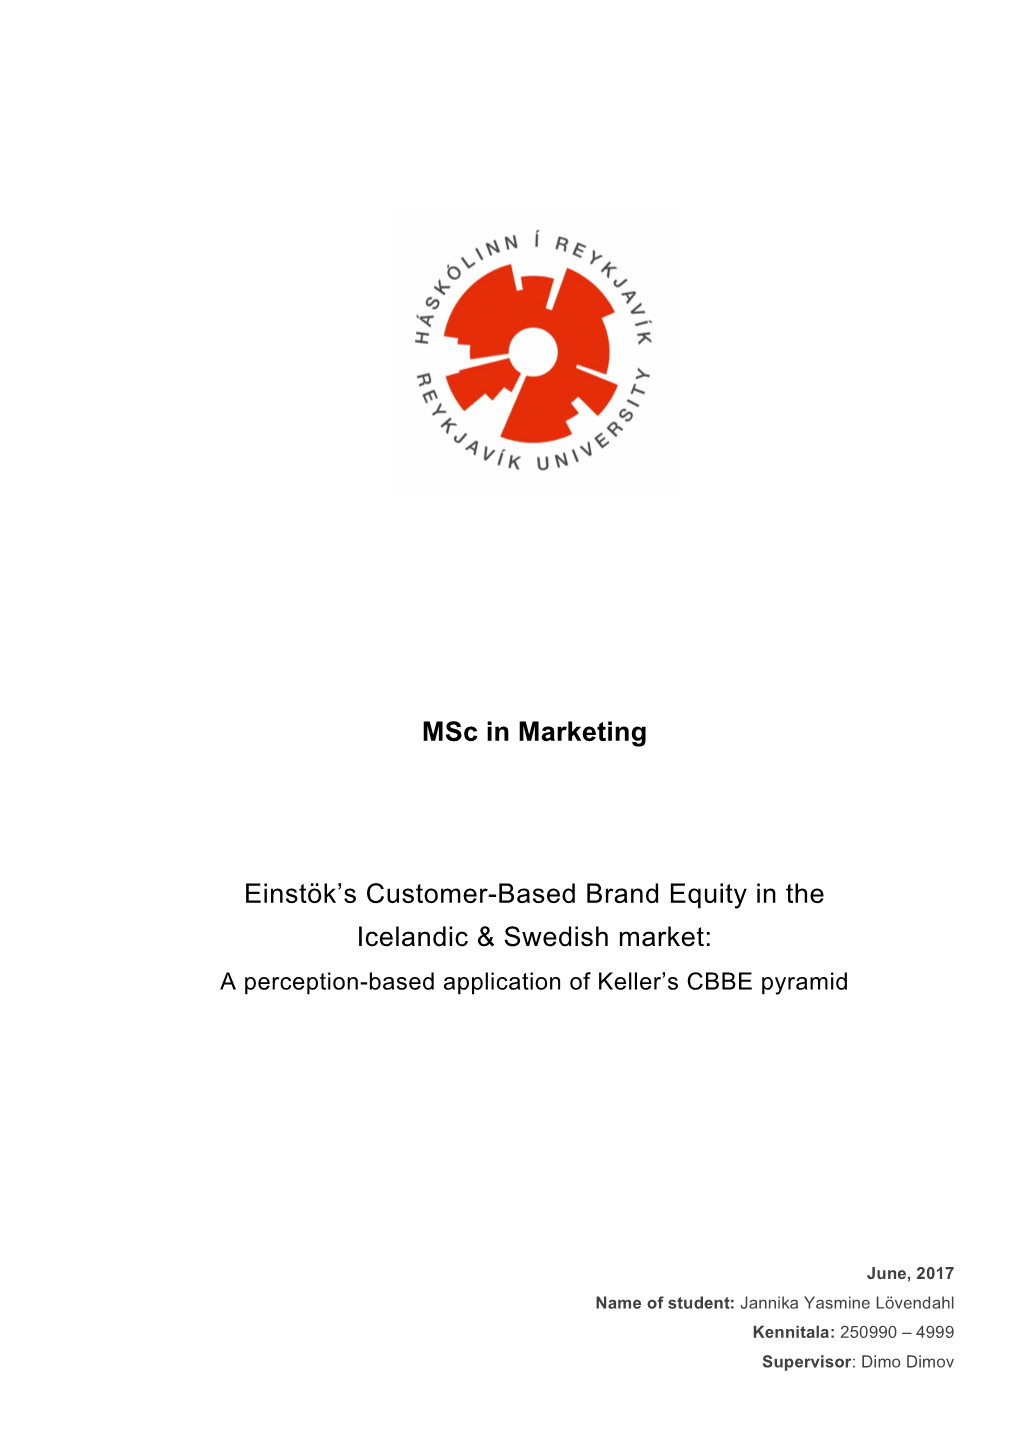 Msc in Marketing Einstök's Customer-Based Brand Equity in the Icelandic & Swedish Market